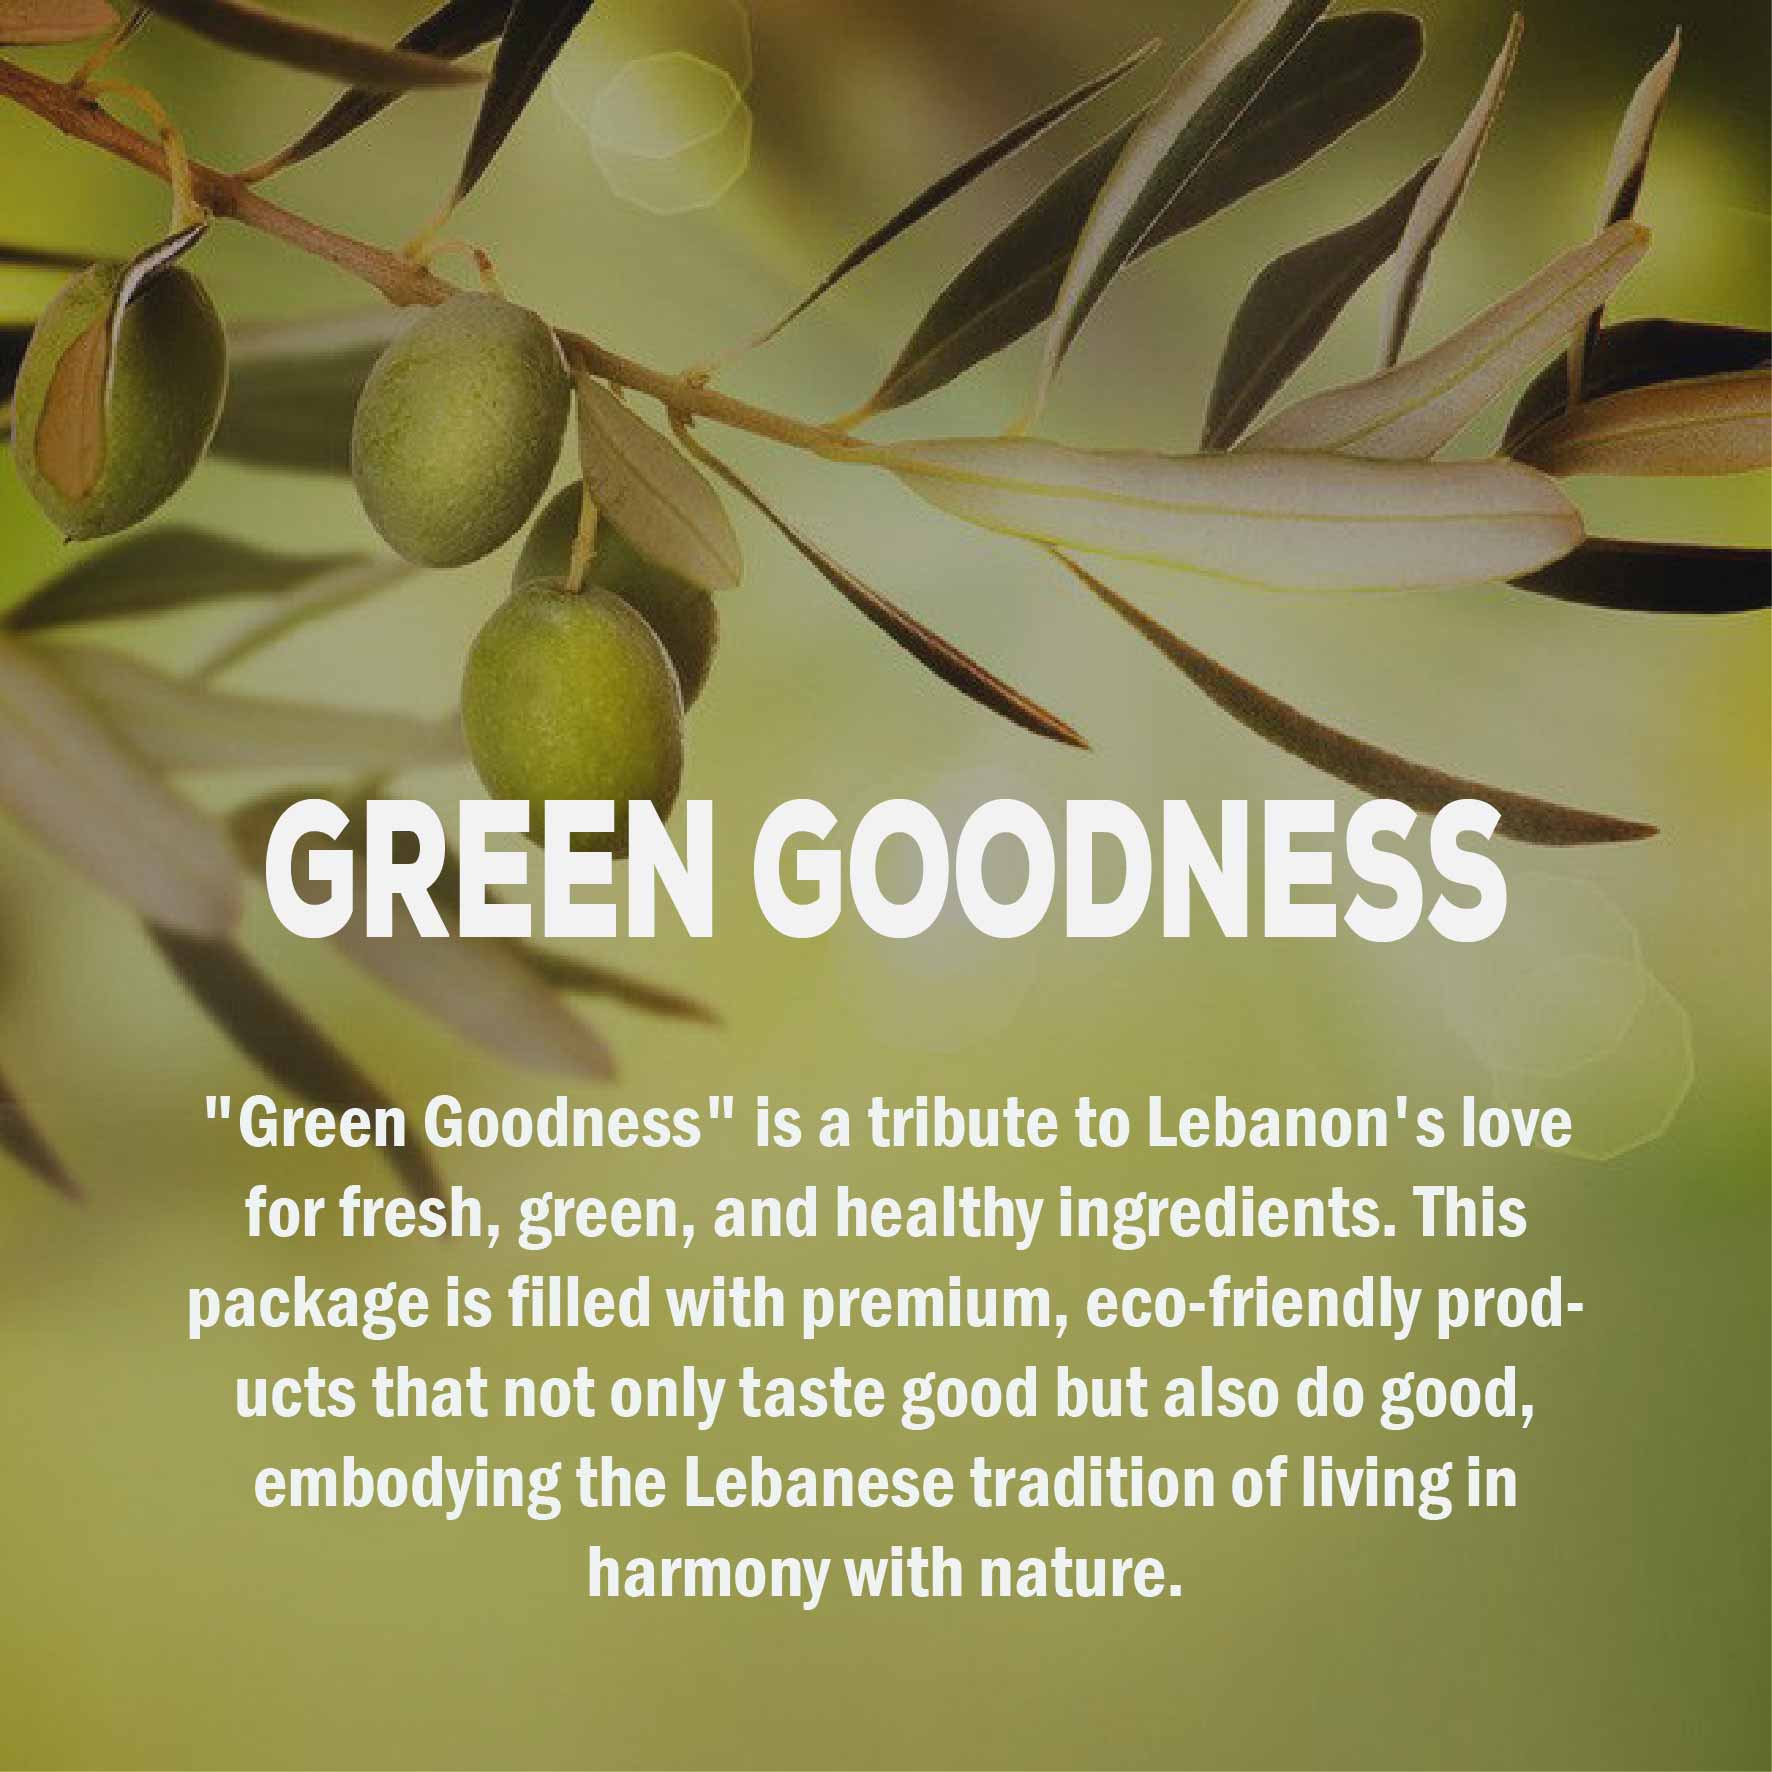 GREEN GOODNESS Desc